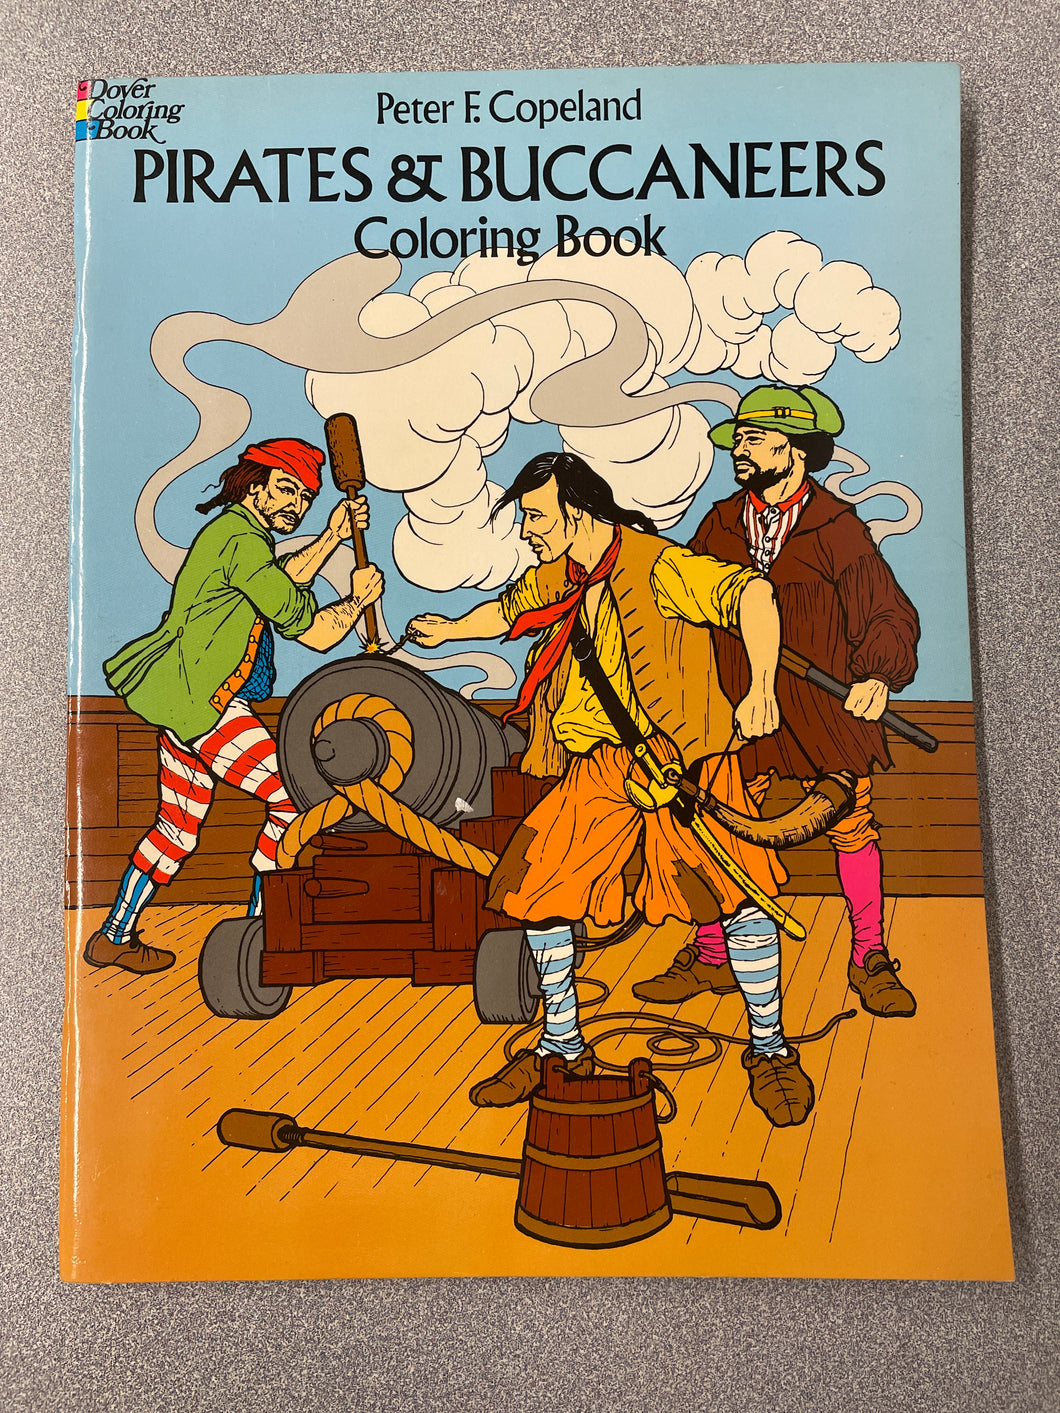 Pirates & Buccaneers Coloring Book, Copeland, Peter F., [1977] CN 2/24